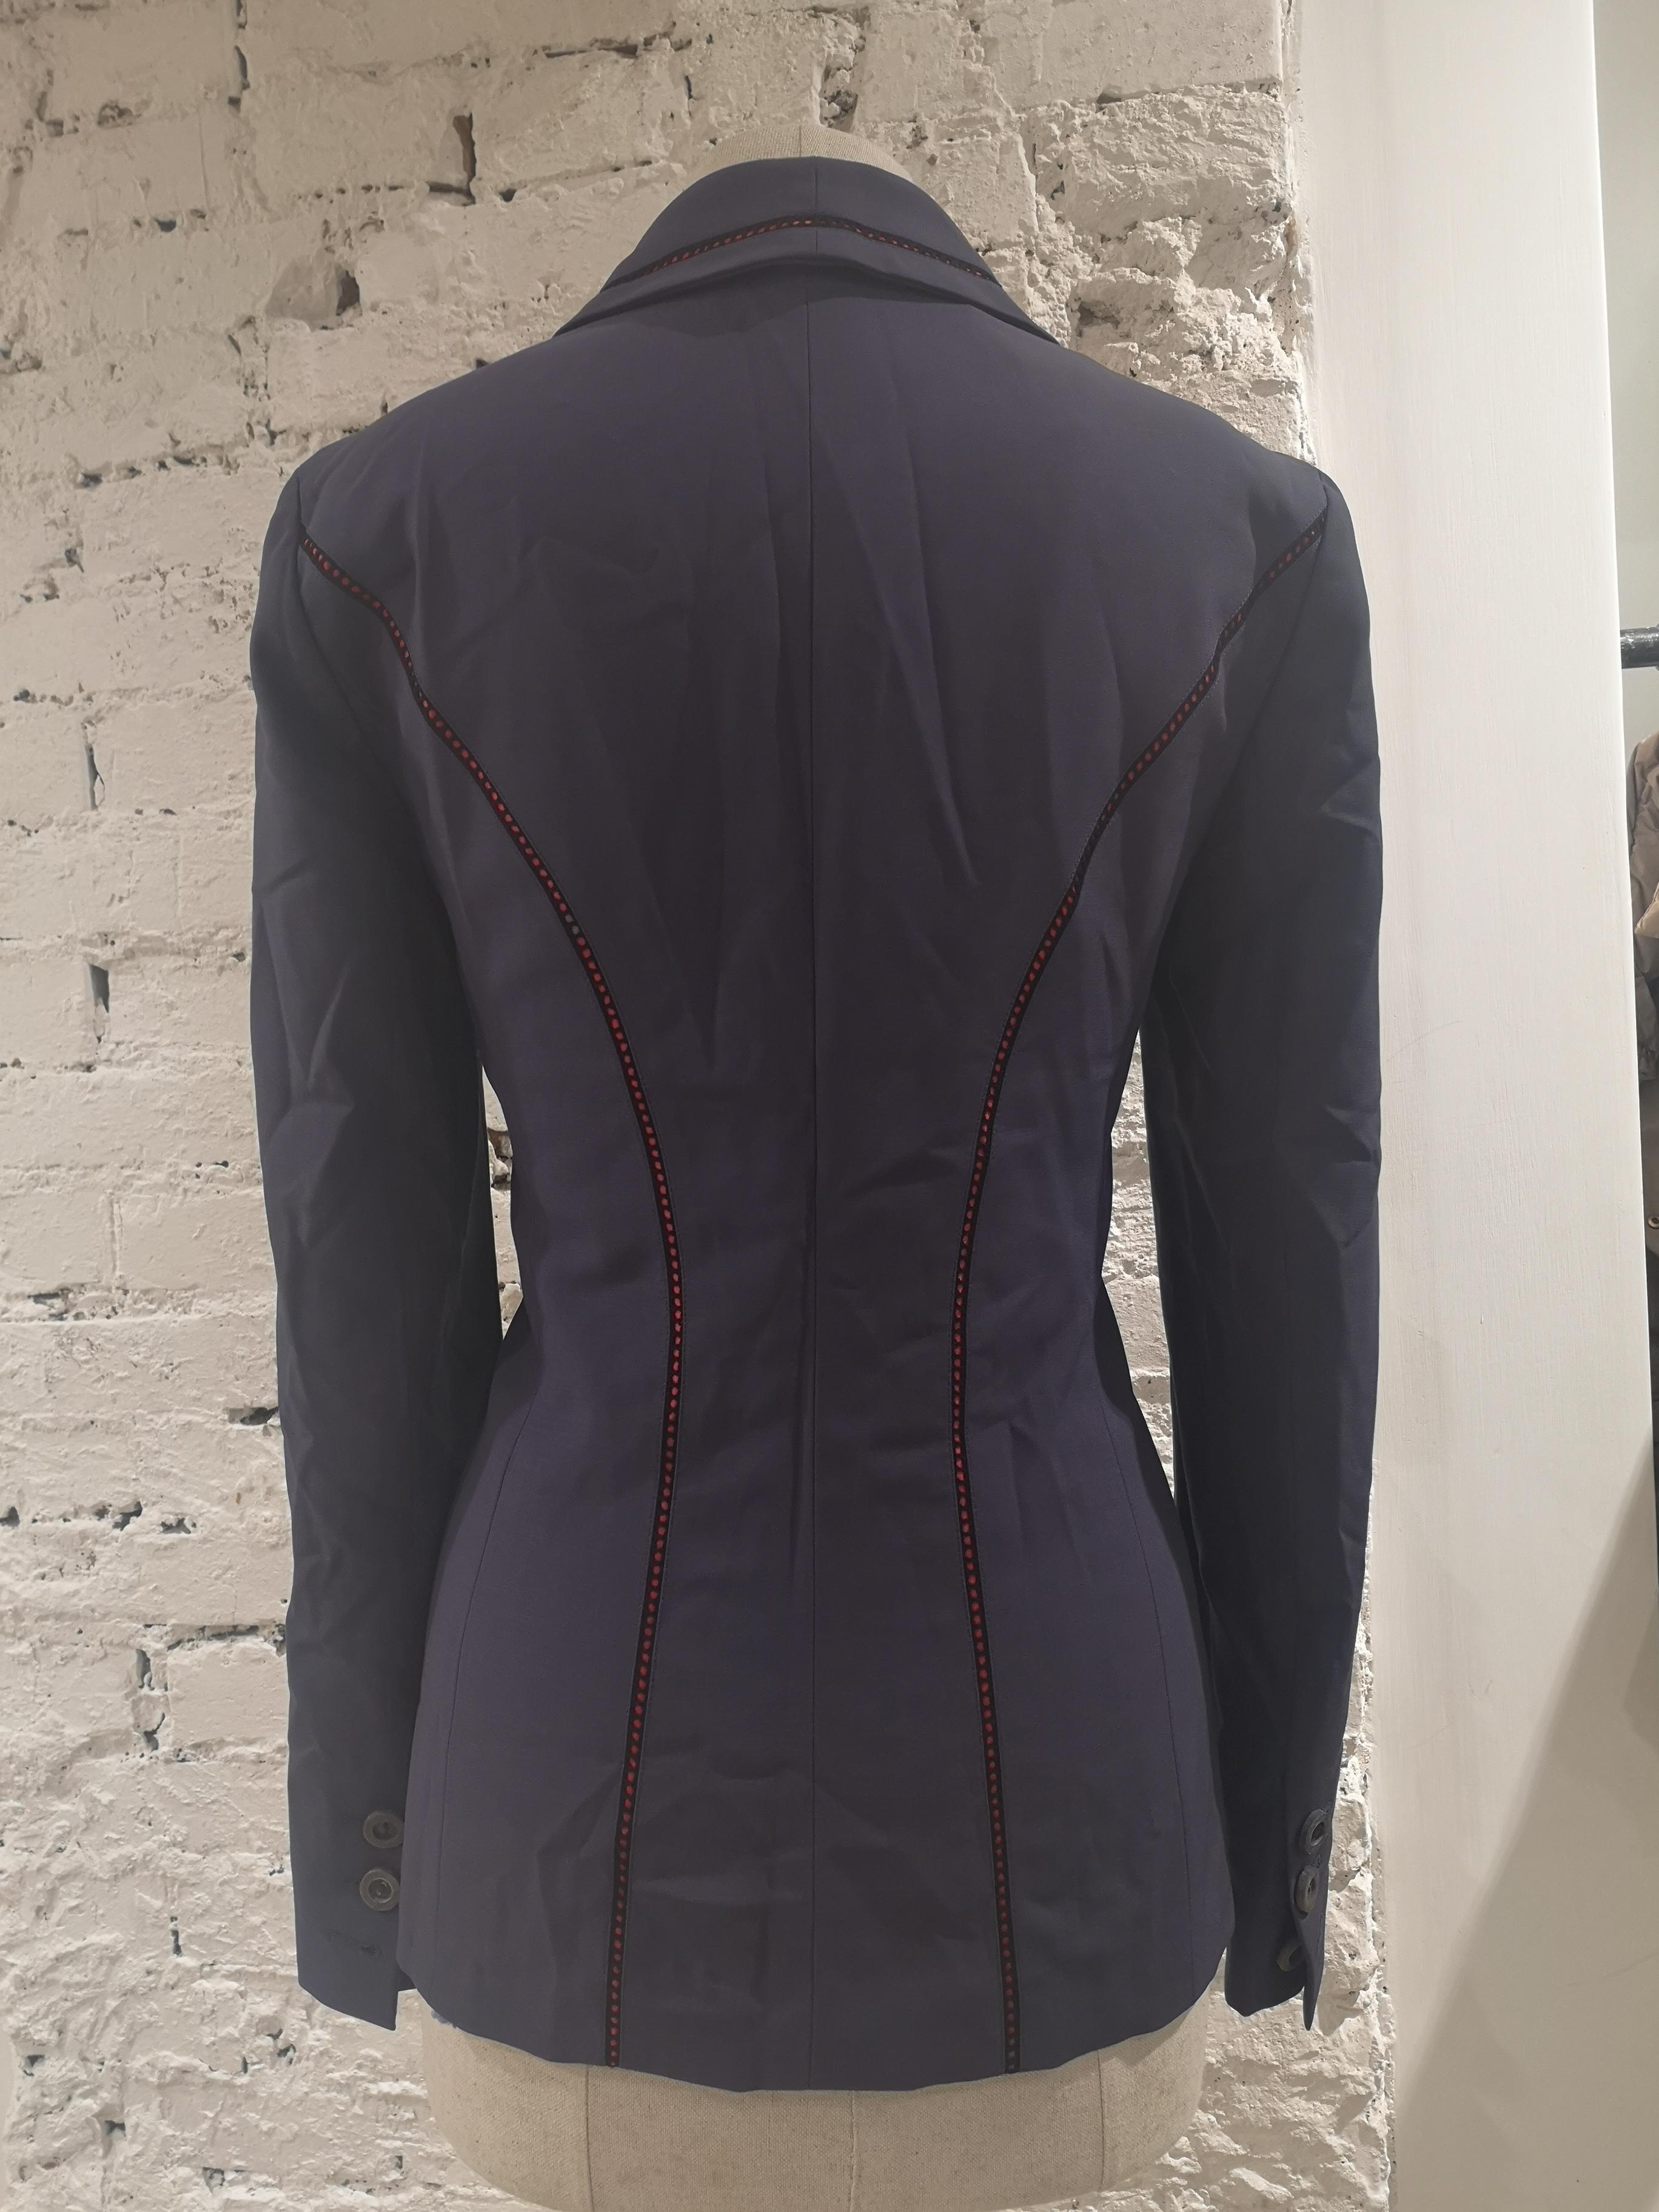 Emanuel Ungaro purple red jacket - blazer For Sale 1